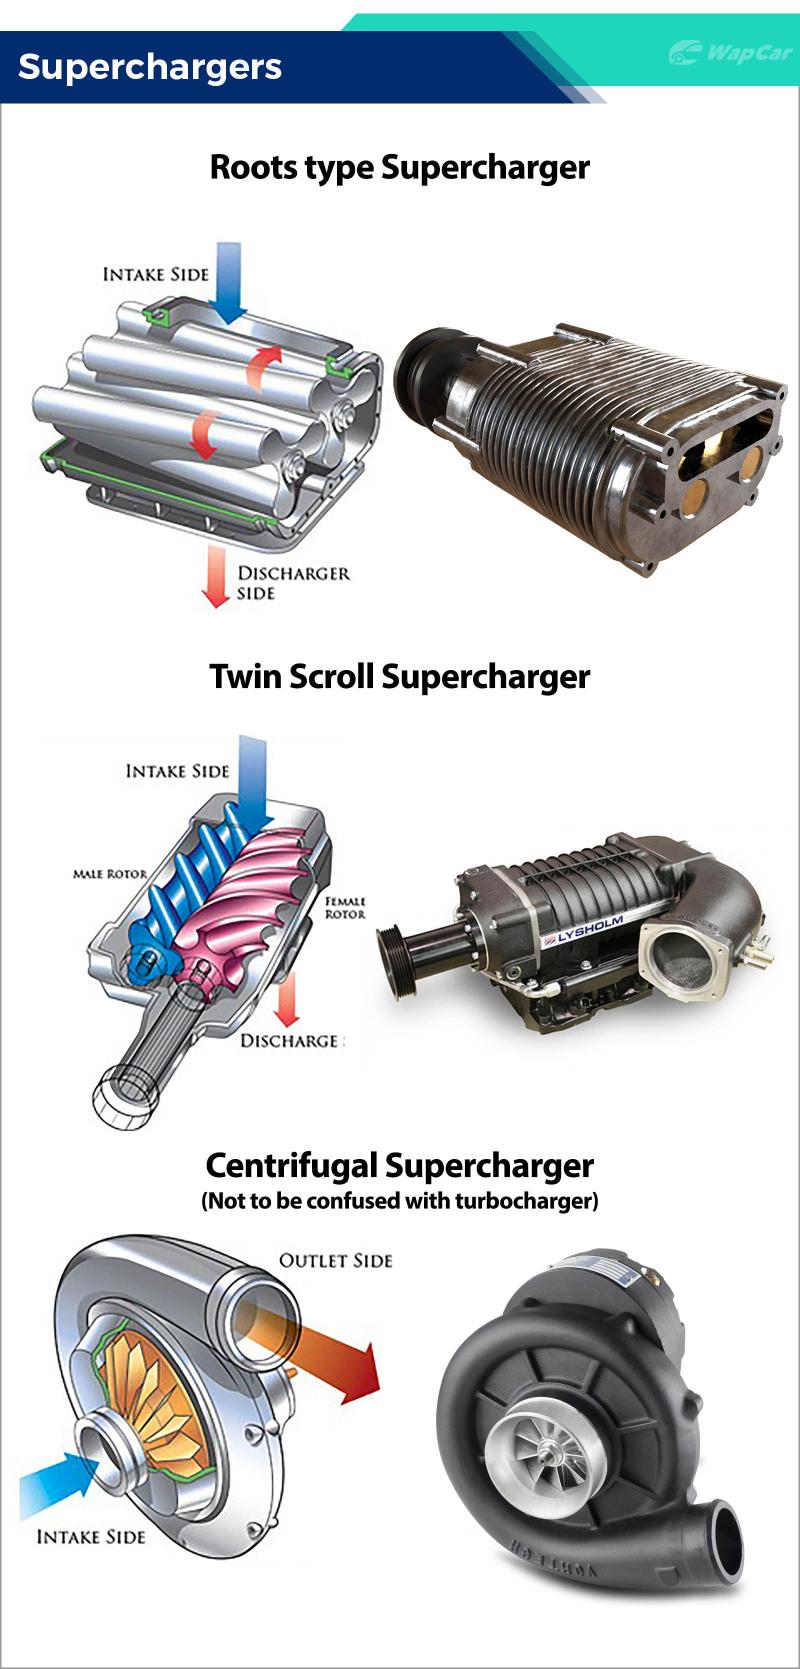 Tiny turbo engines: good or bad? | WapCar